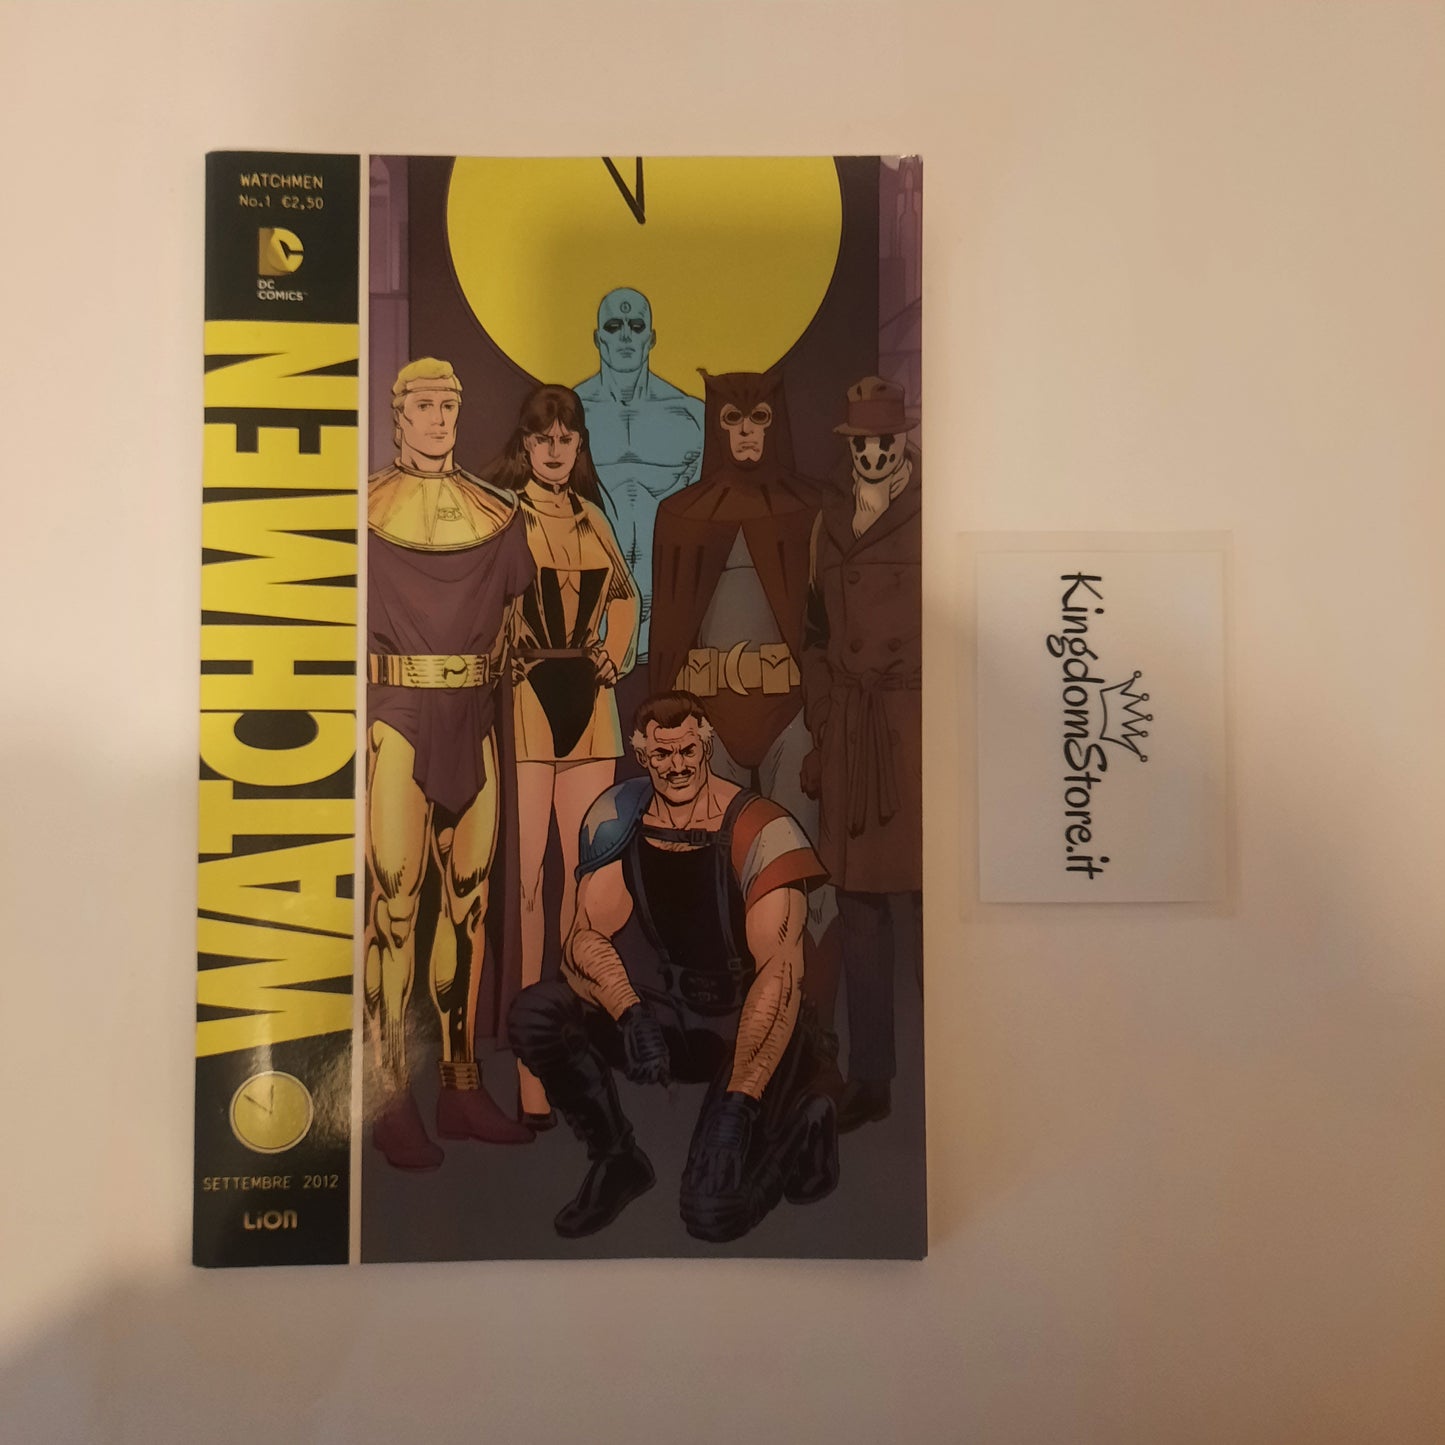 Watchmen - Graphic Novel - Fumetti Sfusi